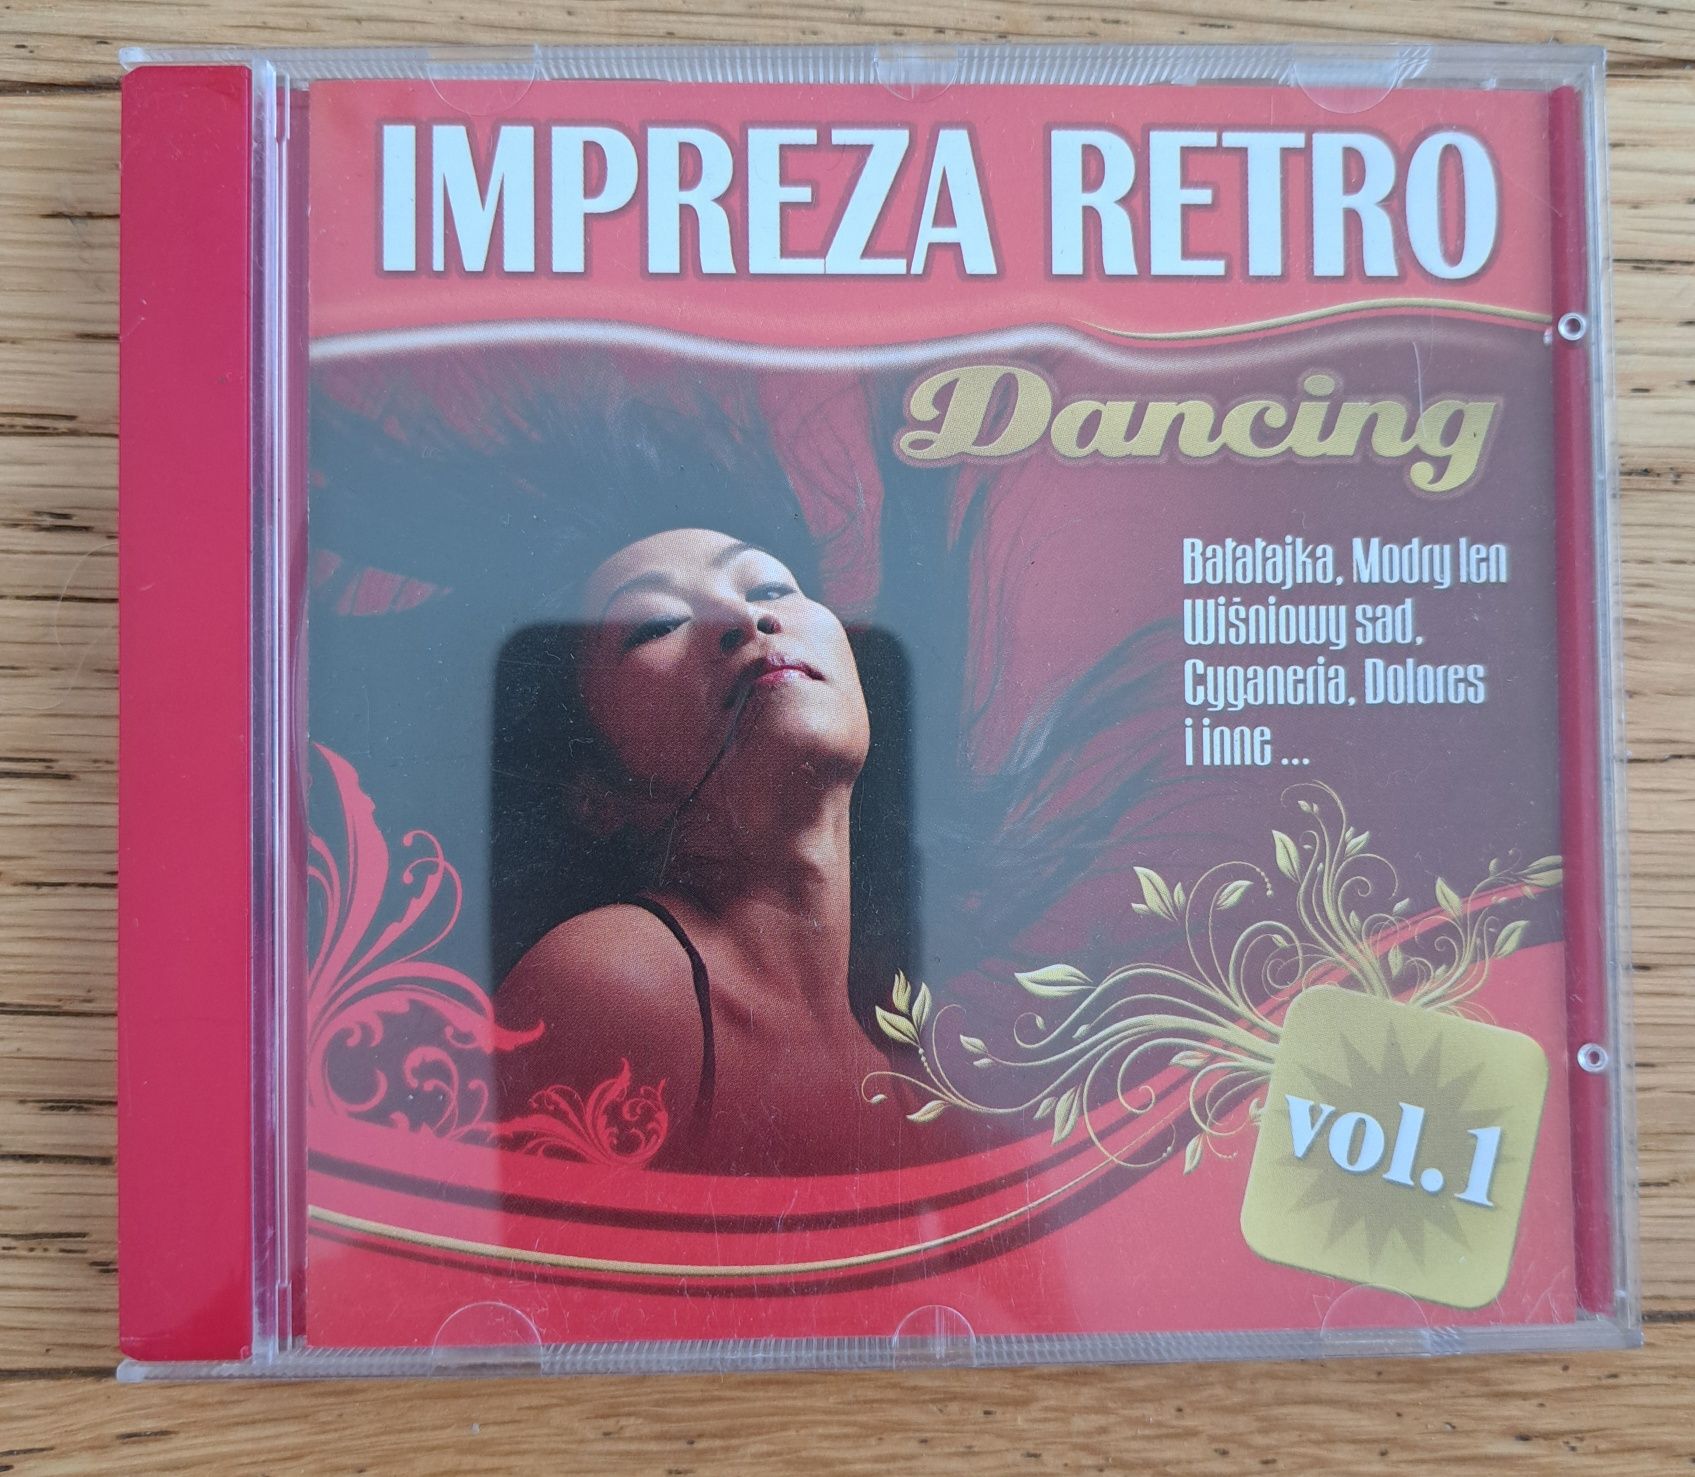 Impreza retro Dancing cd